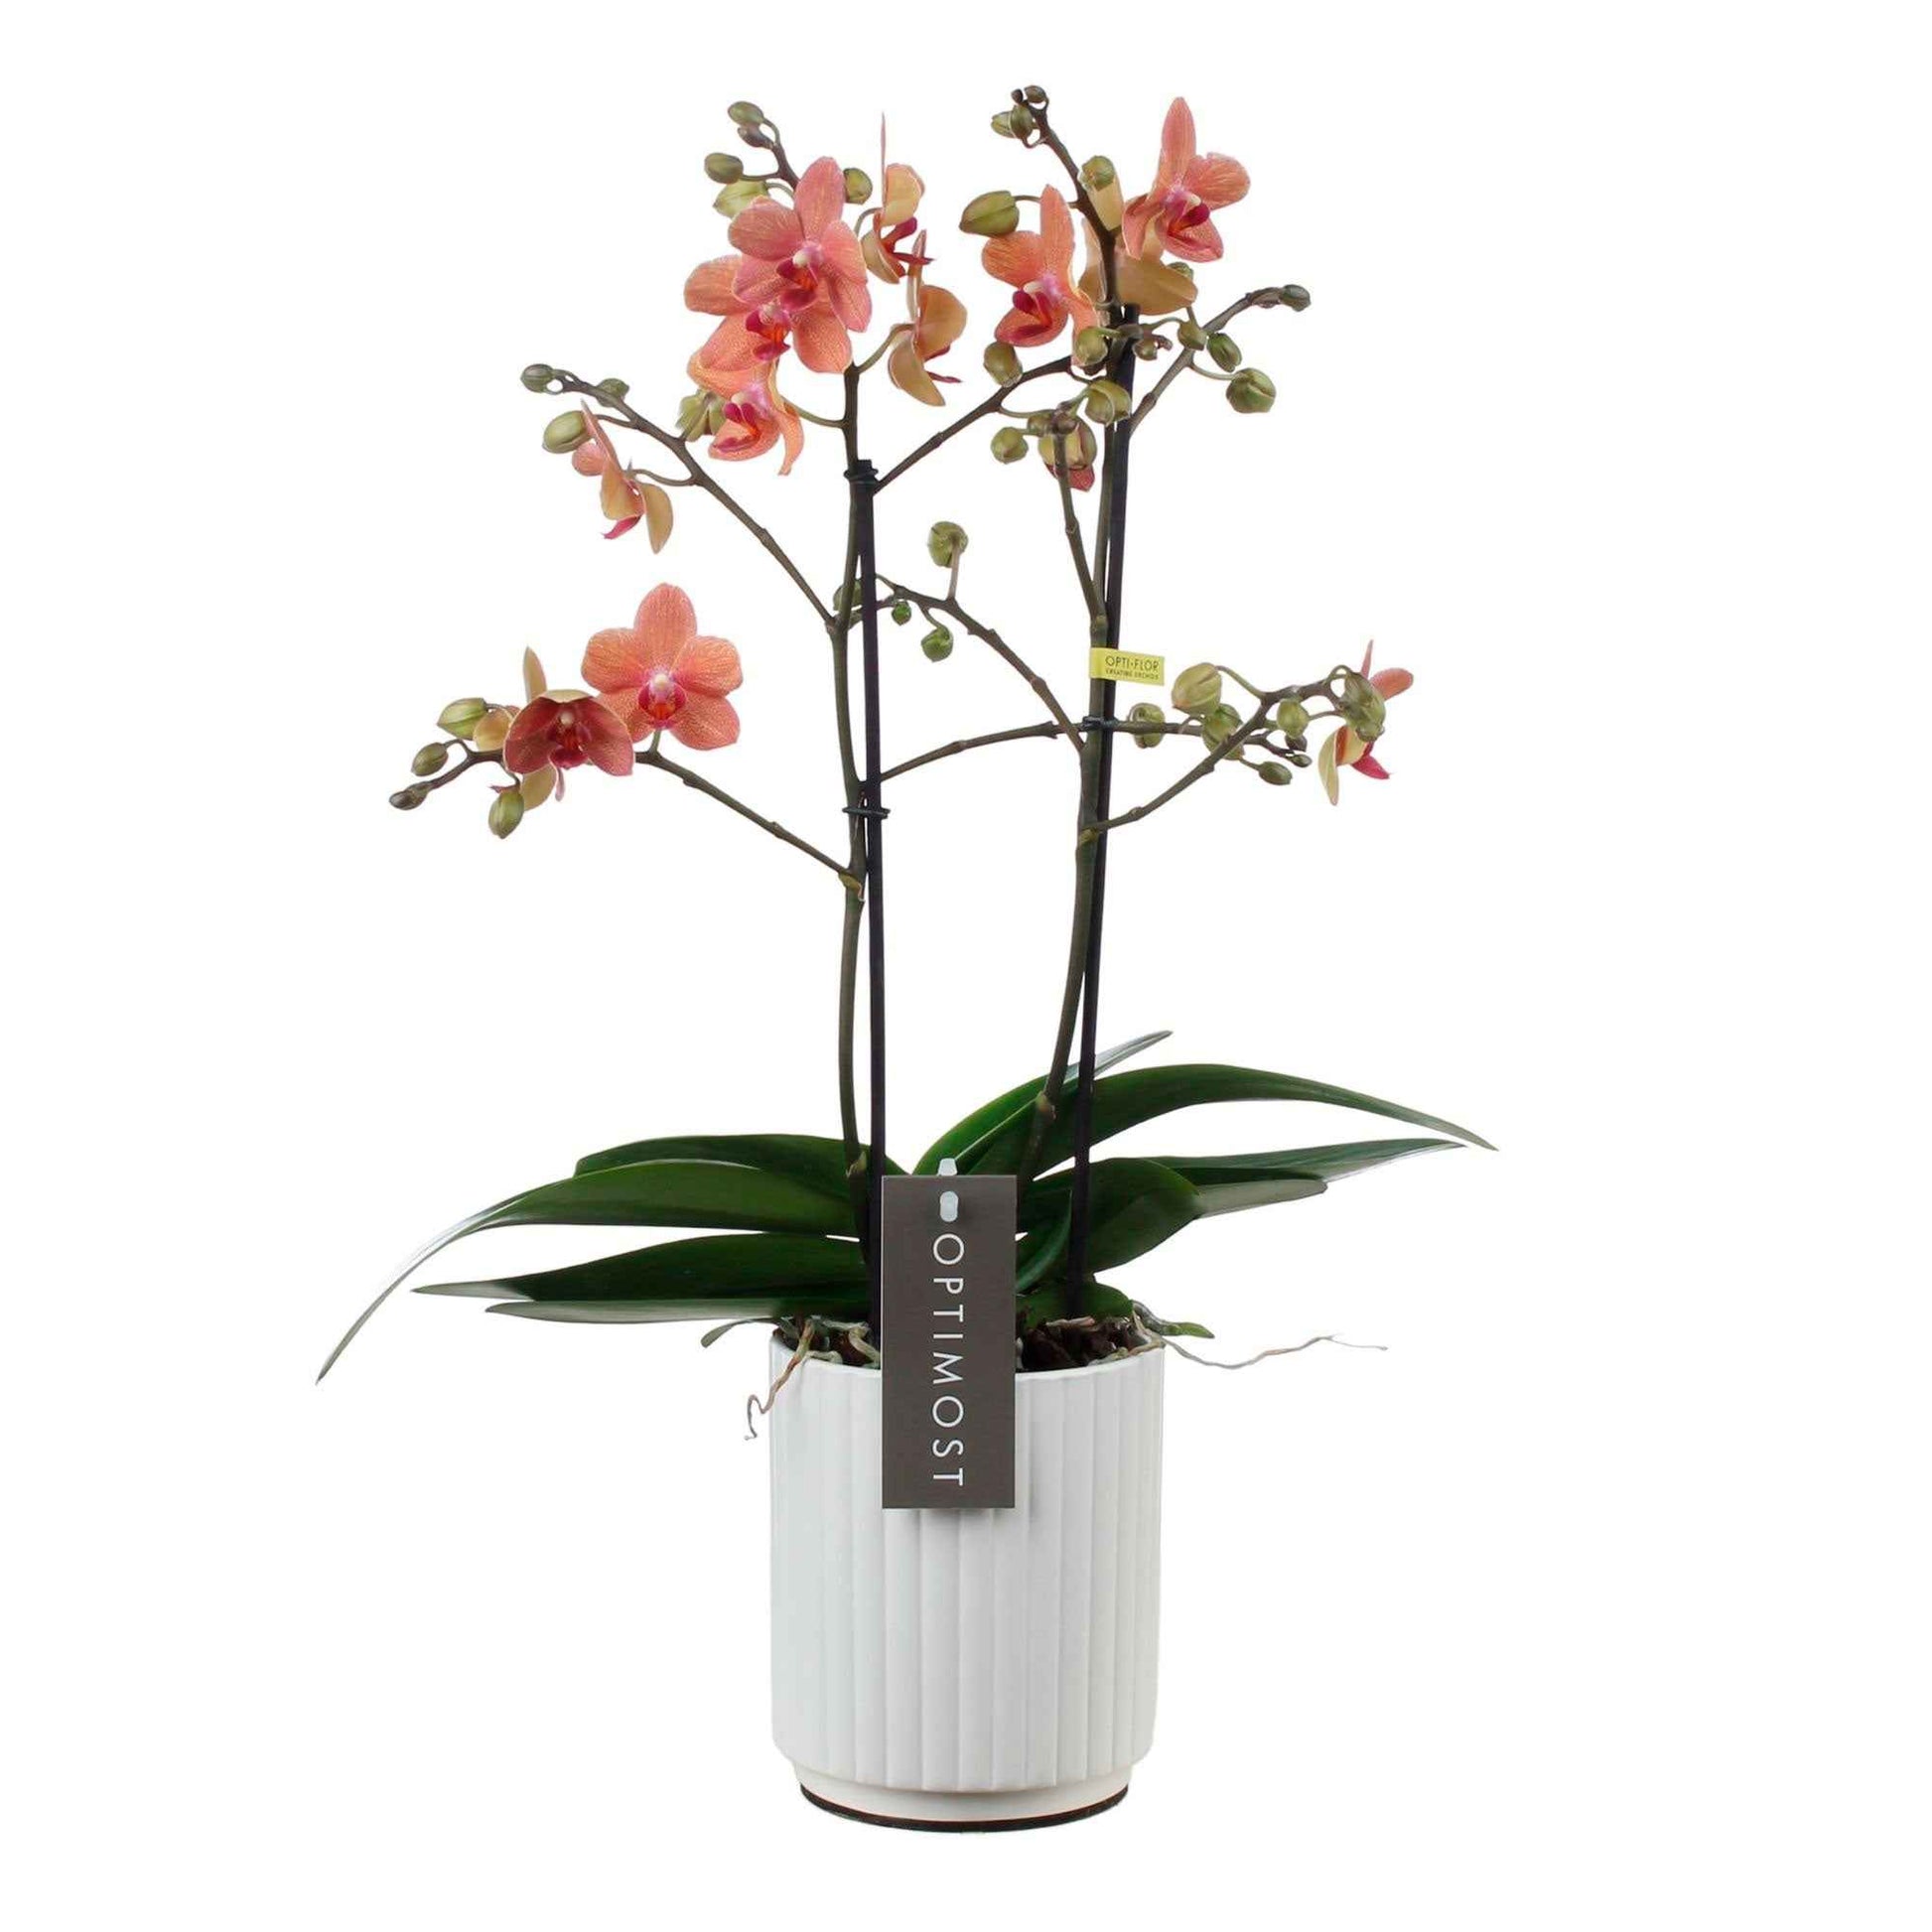 Orchidée Phalaenopsis 'Optimost Sunset Love' Orangé avec pot décoratif - Orchidée - Phalaenopsis